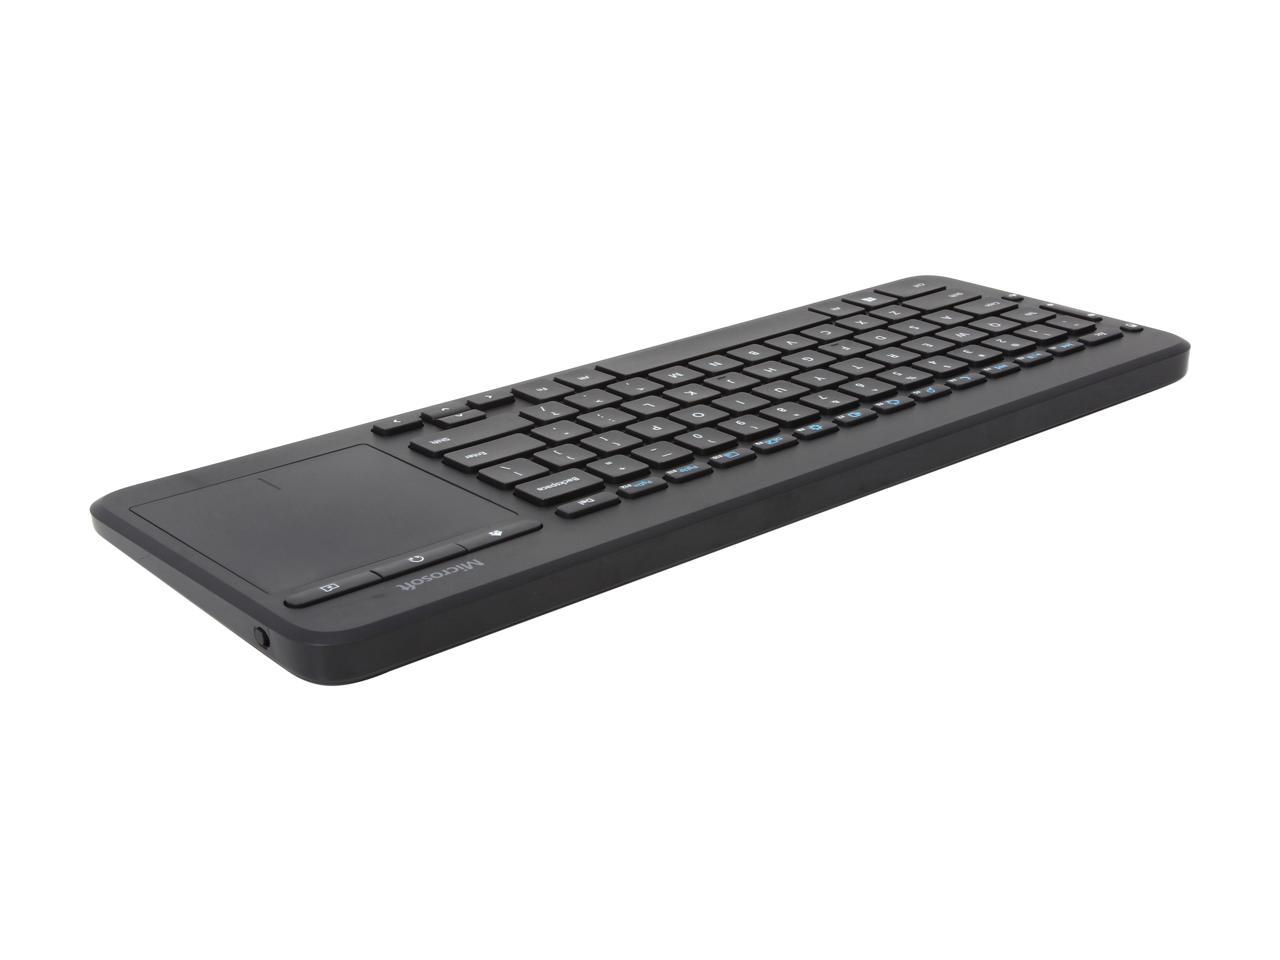 Microsoft Wireless All-In-One Media Keyboard (N9Z-00001), Black